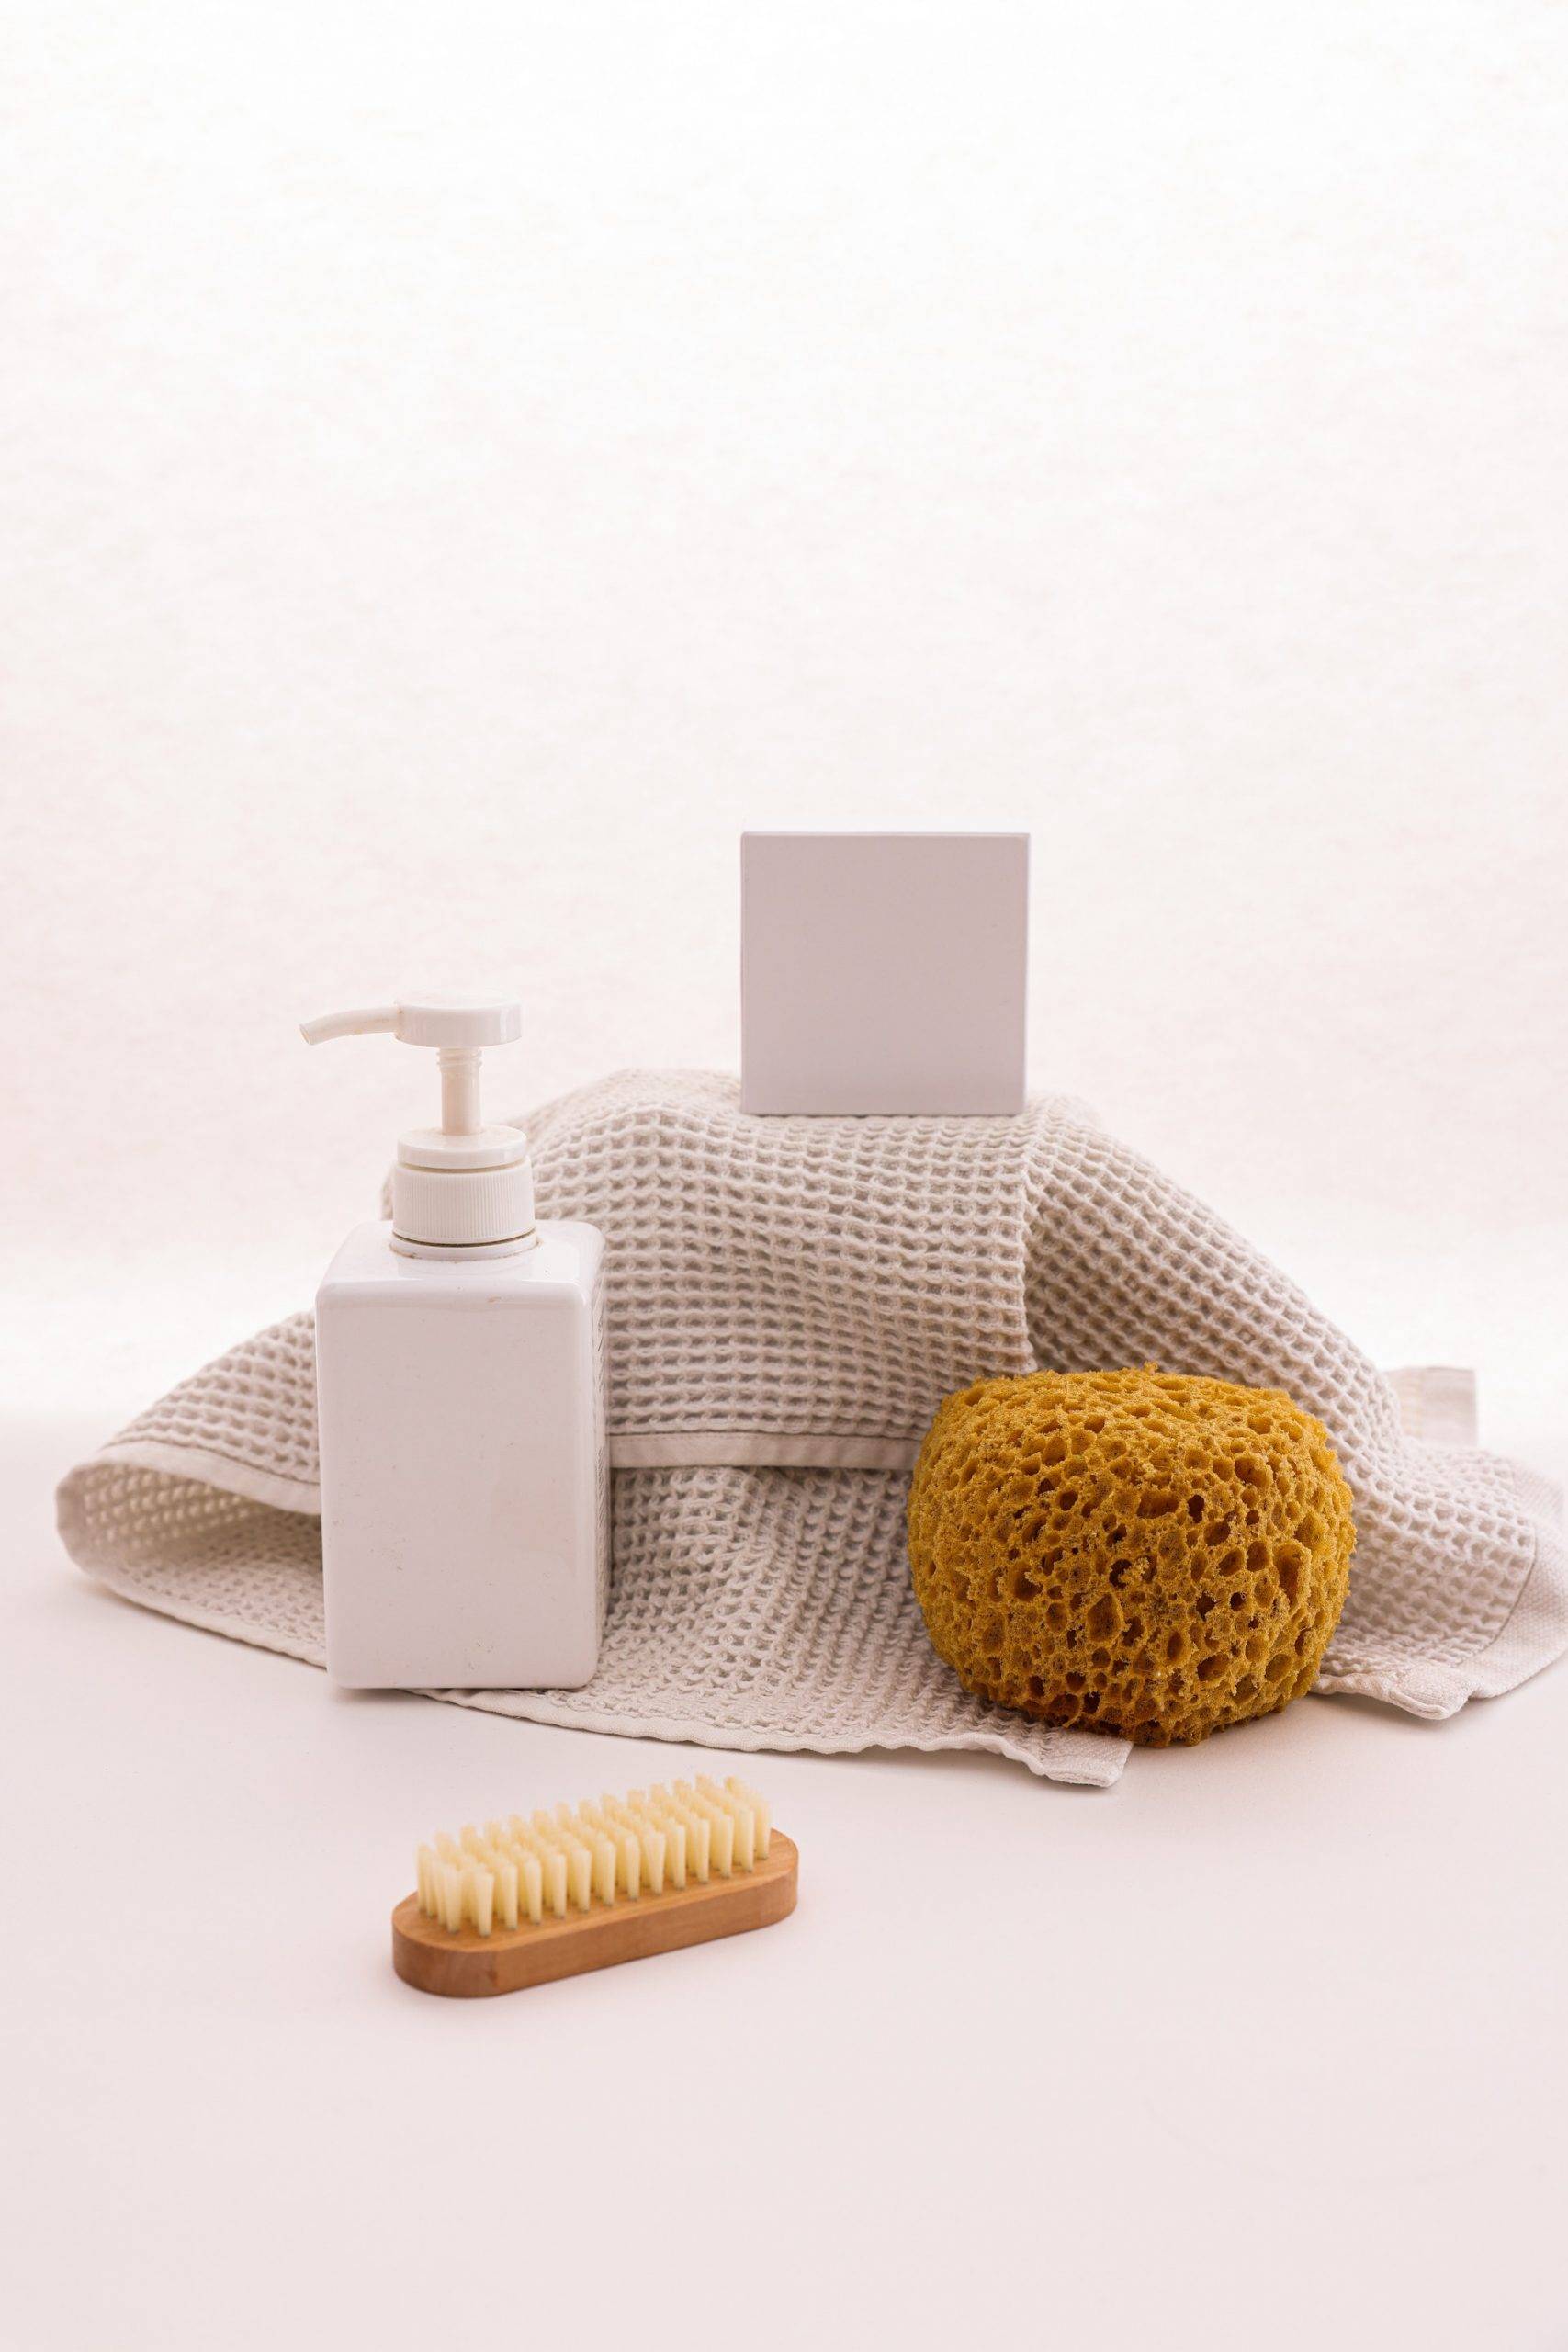 Benefits of Using a Bath Sponge scaled